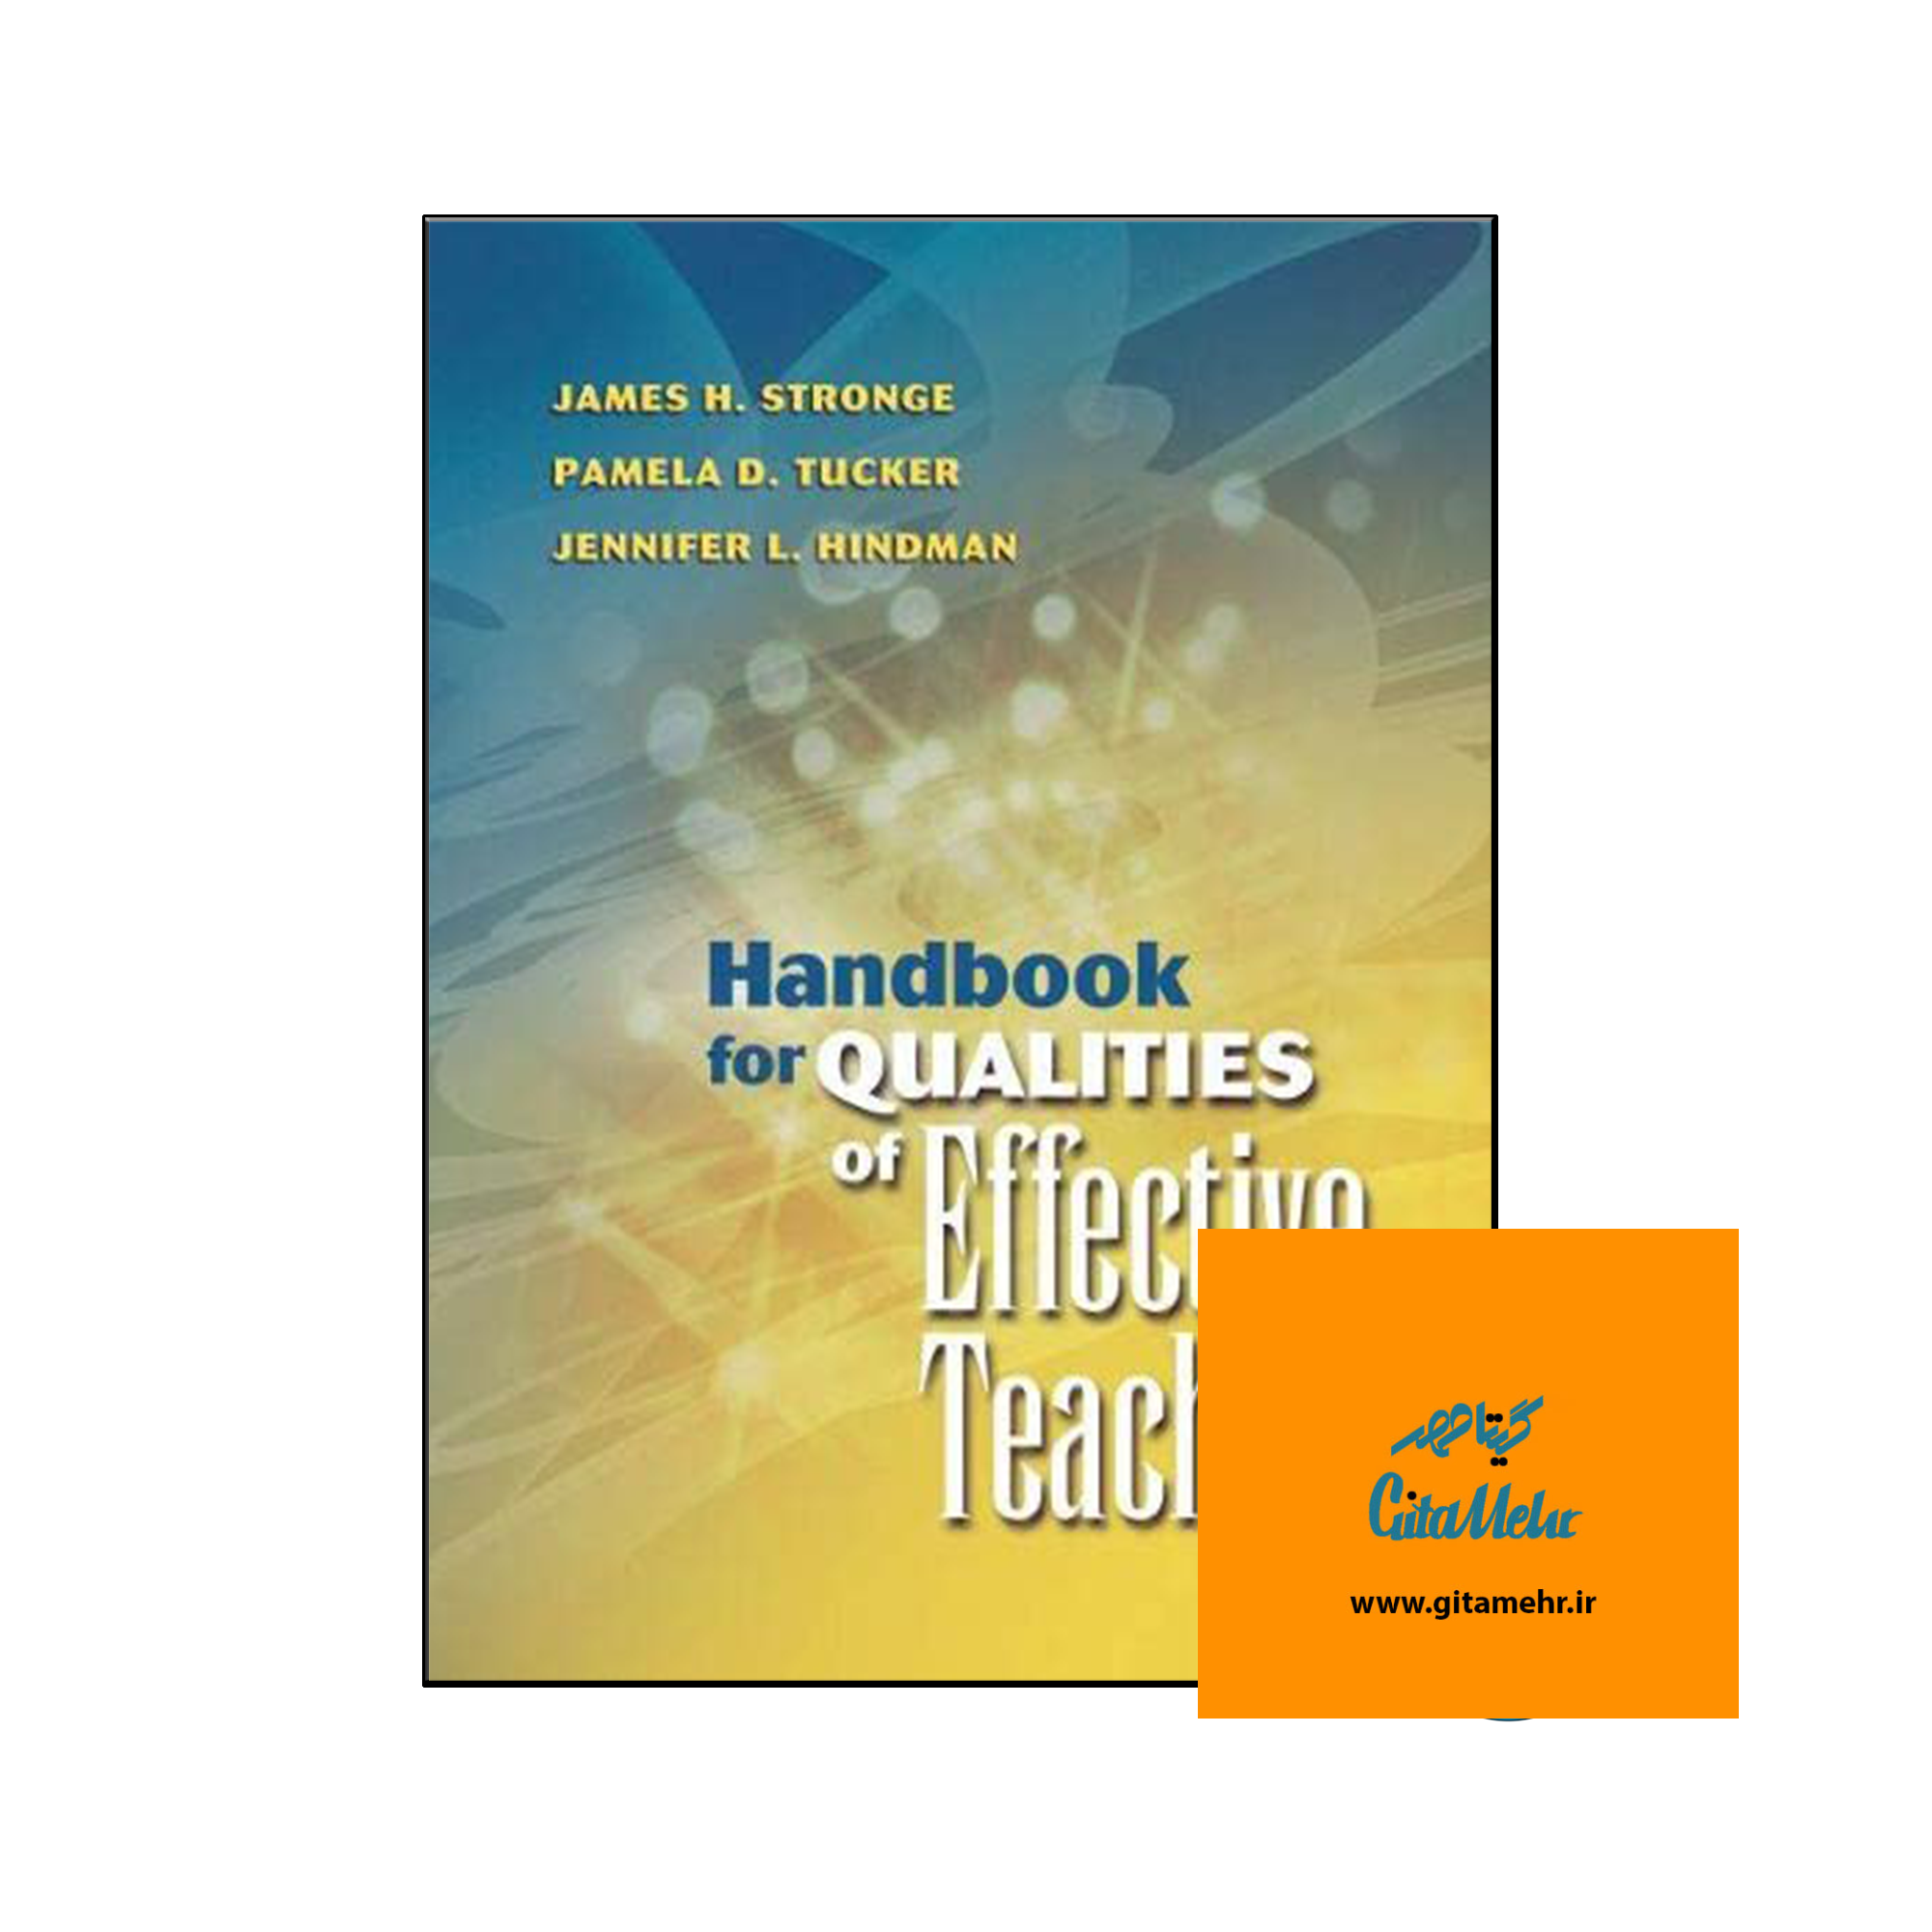 daa9d8aad8a7d8a8 handbook for qualities of effective teachers 65ed8a4ace14e